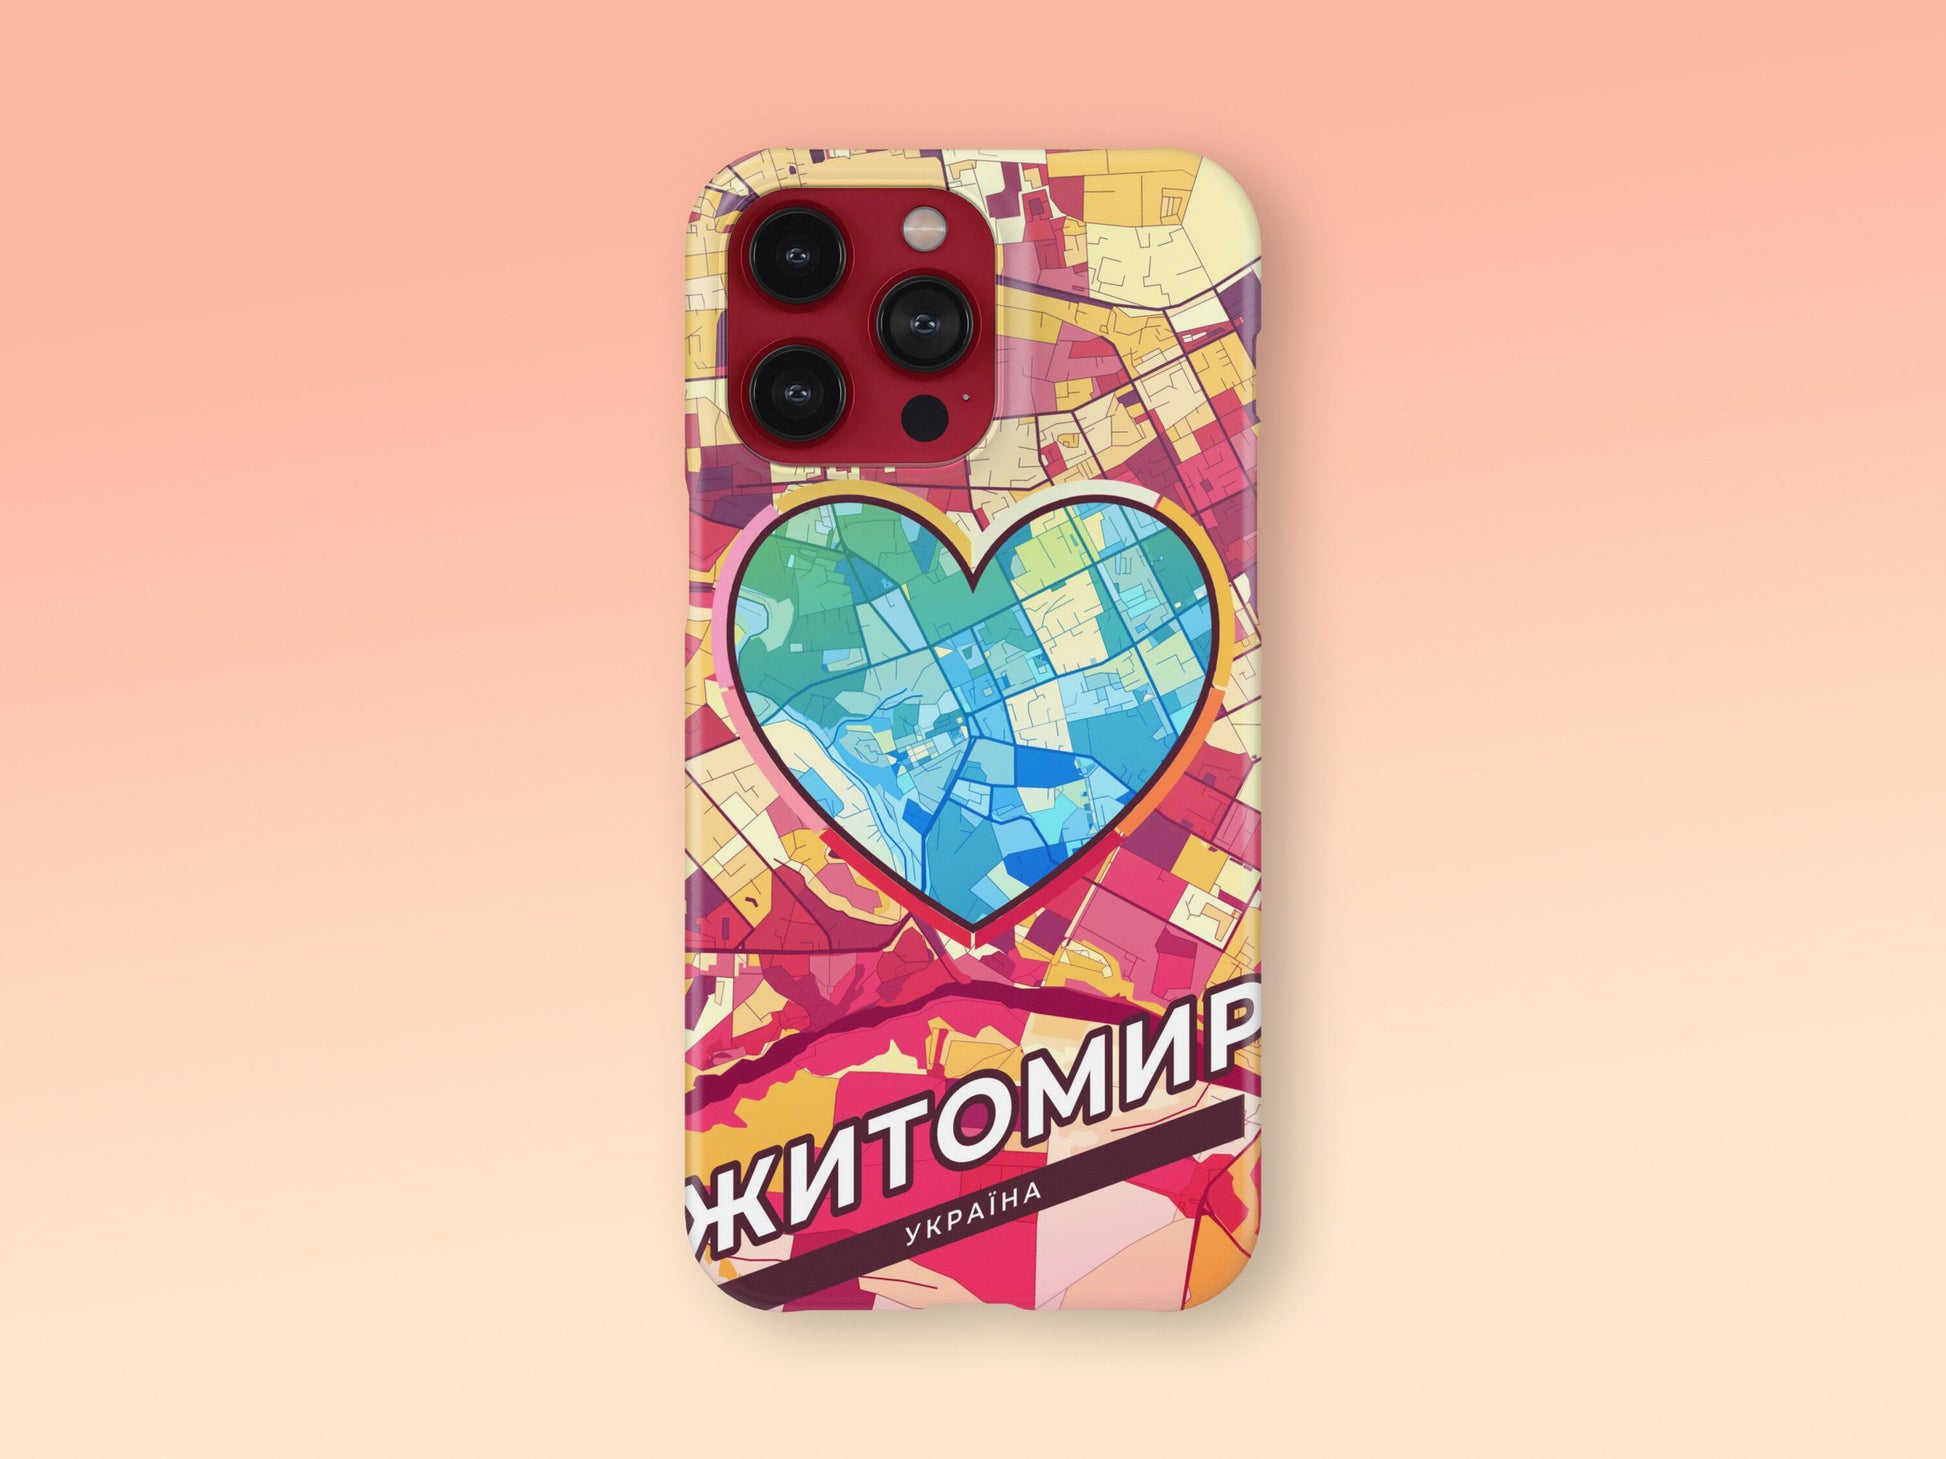 Zhytomyr Ukraine slim phone case with colorful icon 2